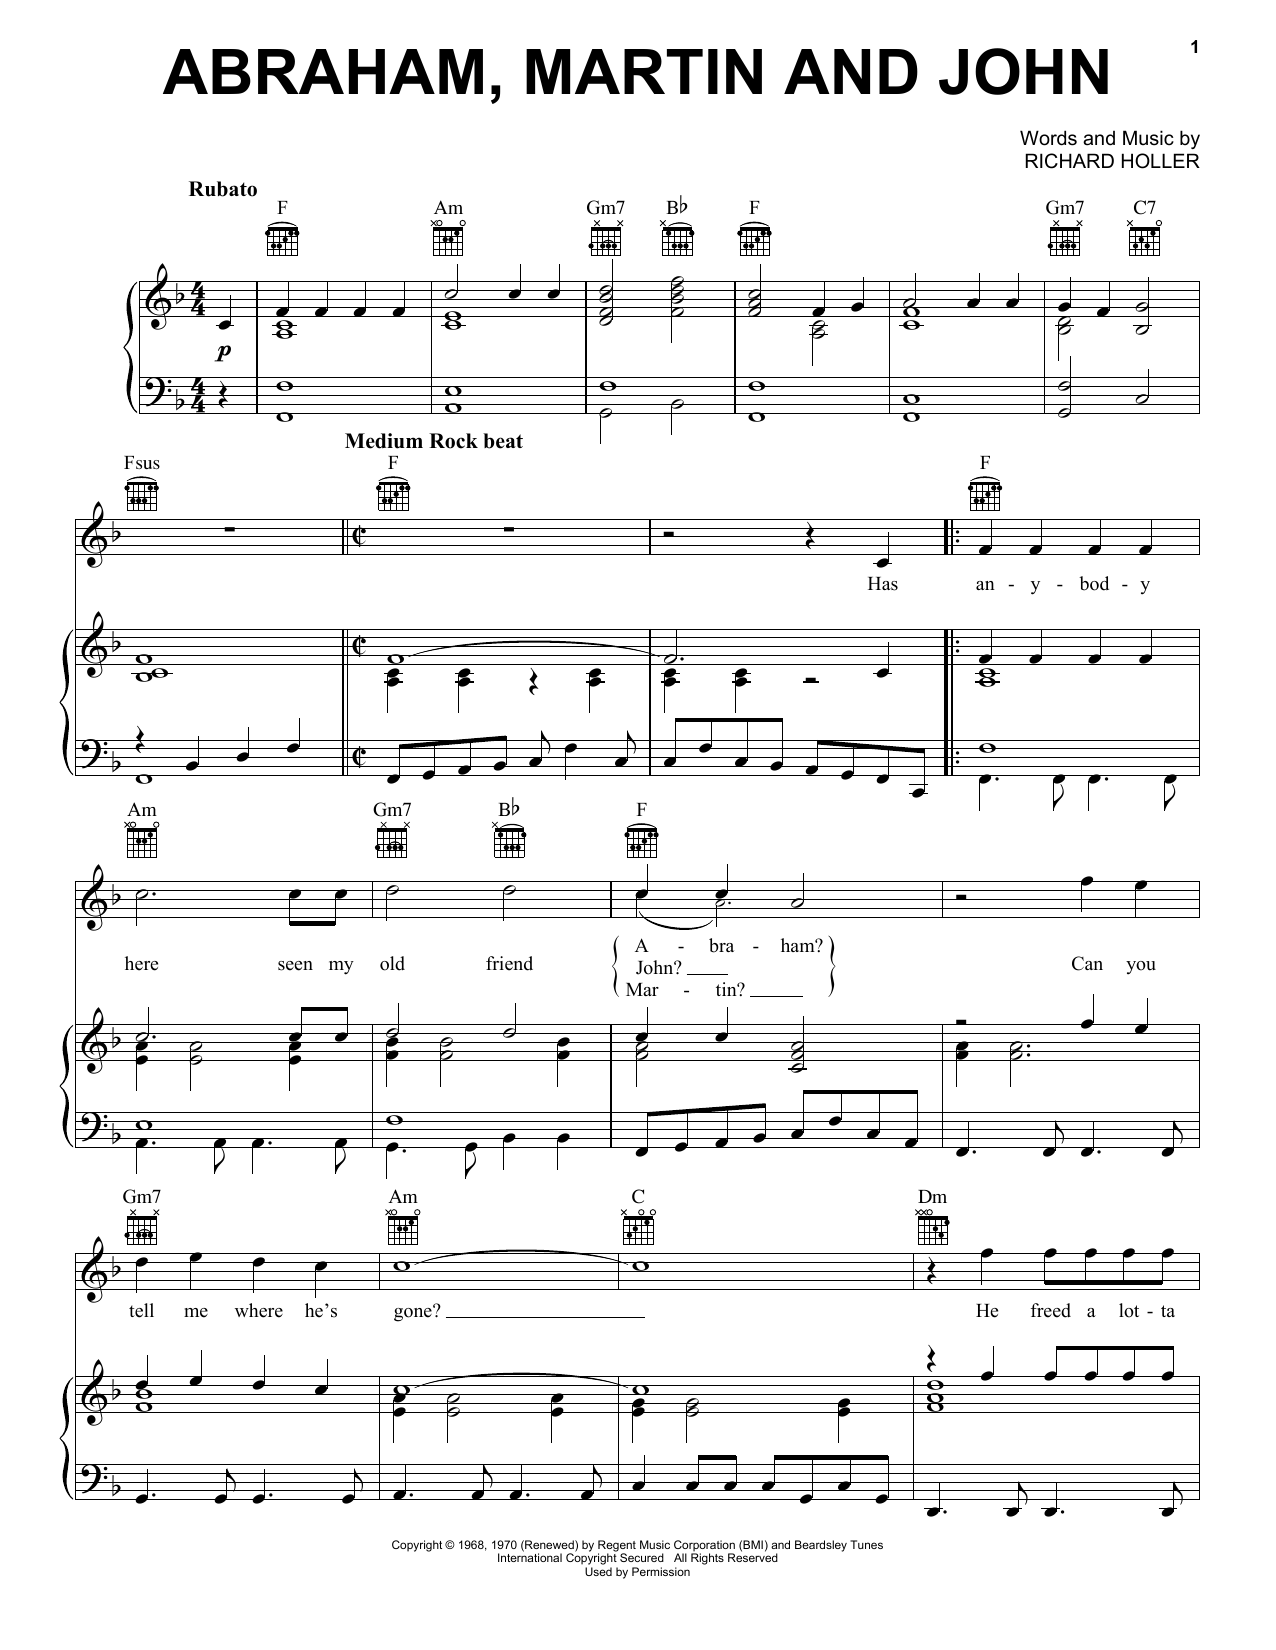 Dion Abraham, Martin And John Sheet Music Notes & Chords for Melody Line, Lyrics & Chords - Download or Print PDF